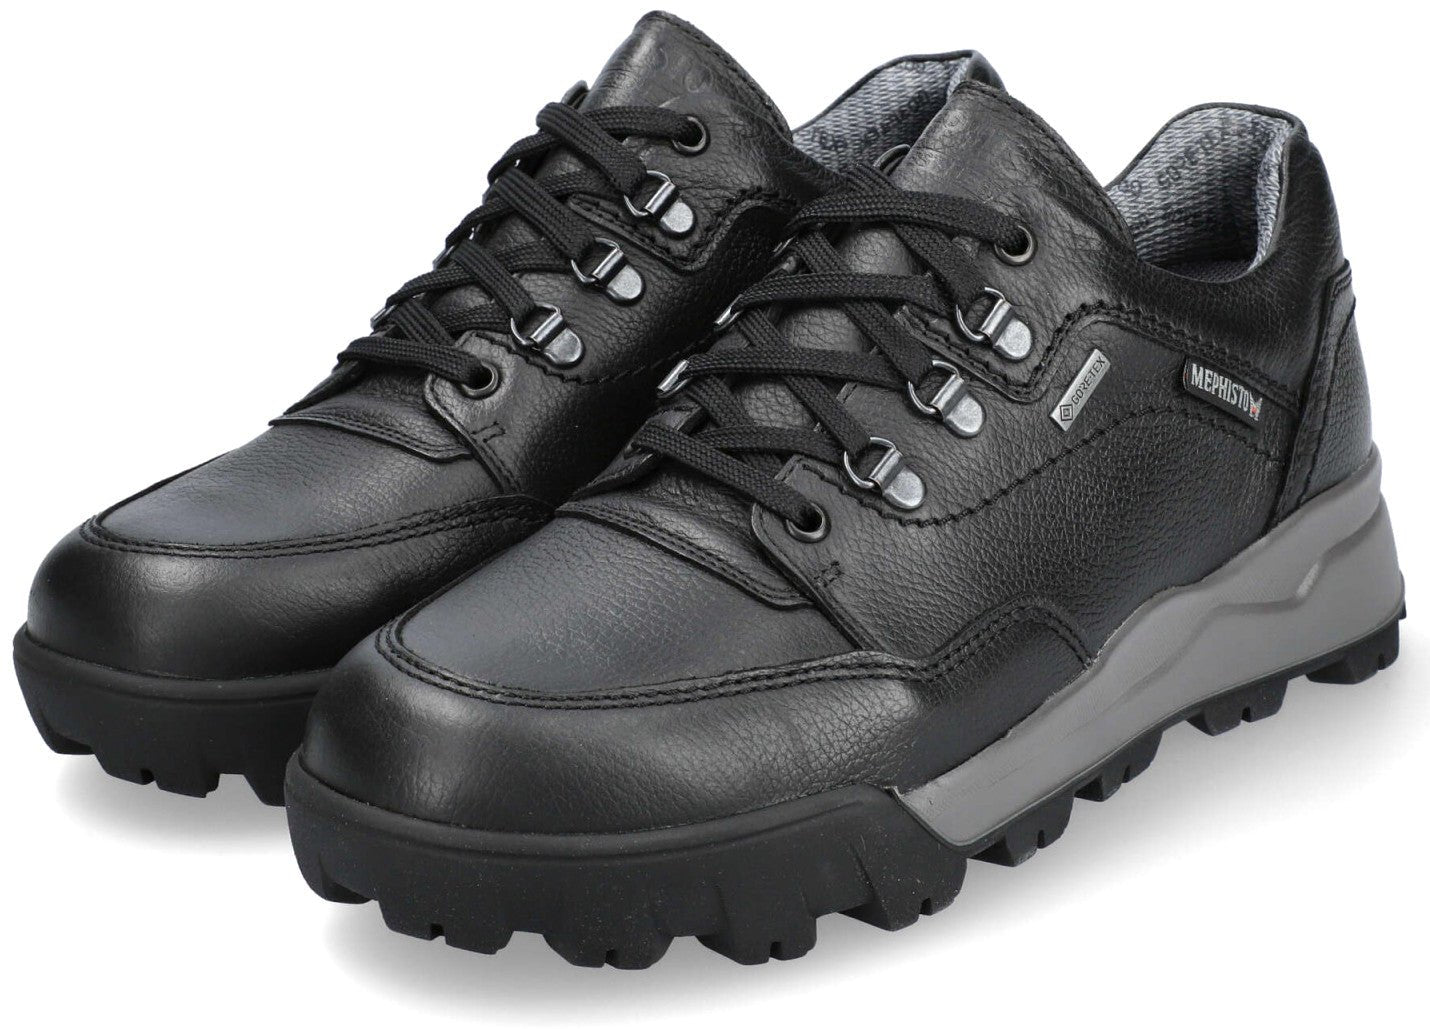 Mephisto WESLEY GT (GORE-TEX) men's lace-up shoe - black - leather WATERPROOF - ChaplinshoesMephisto WESLEY GT (GORE-TEX) men's lace-up shoe - black - leather WATERPROOFMephisto